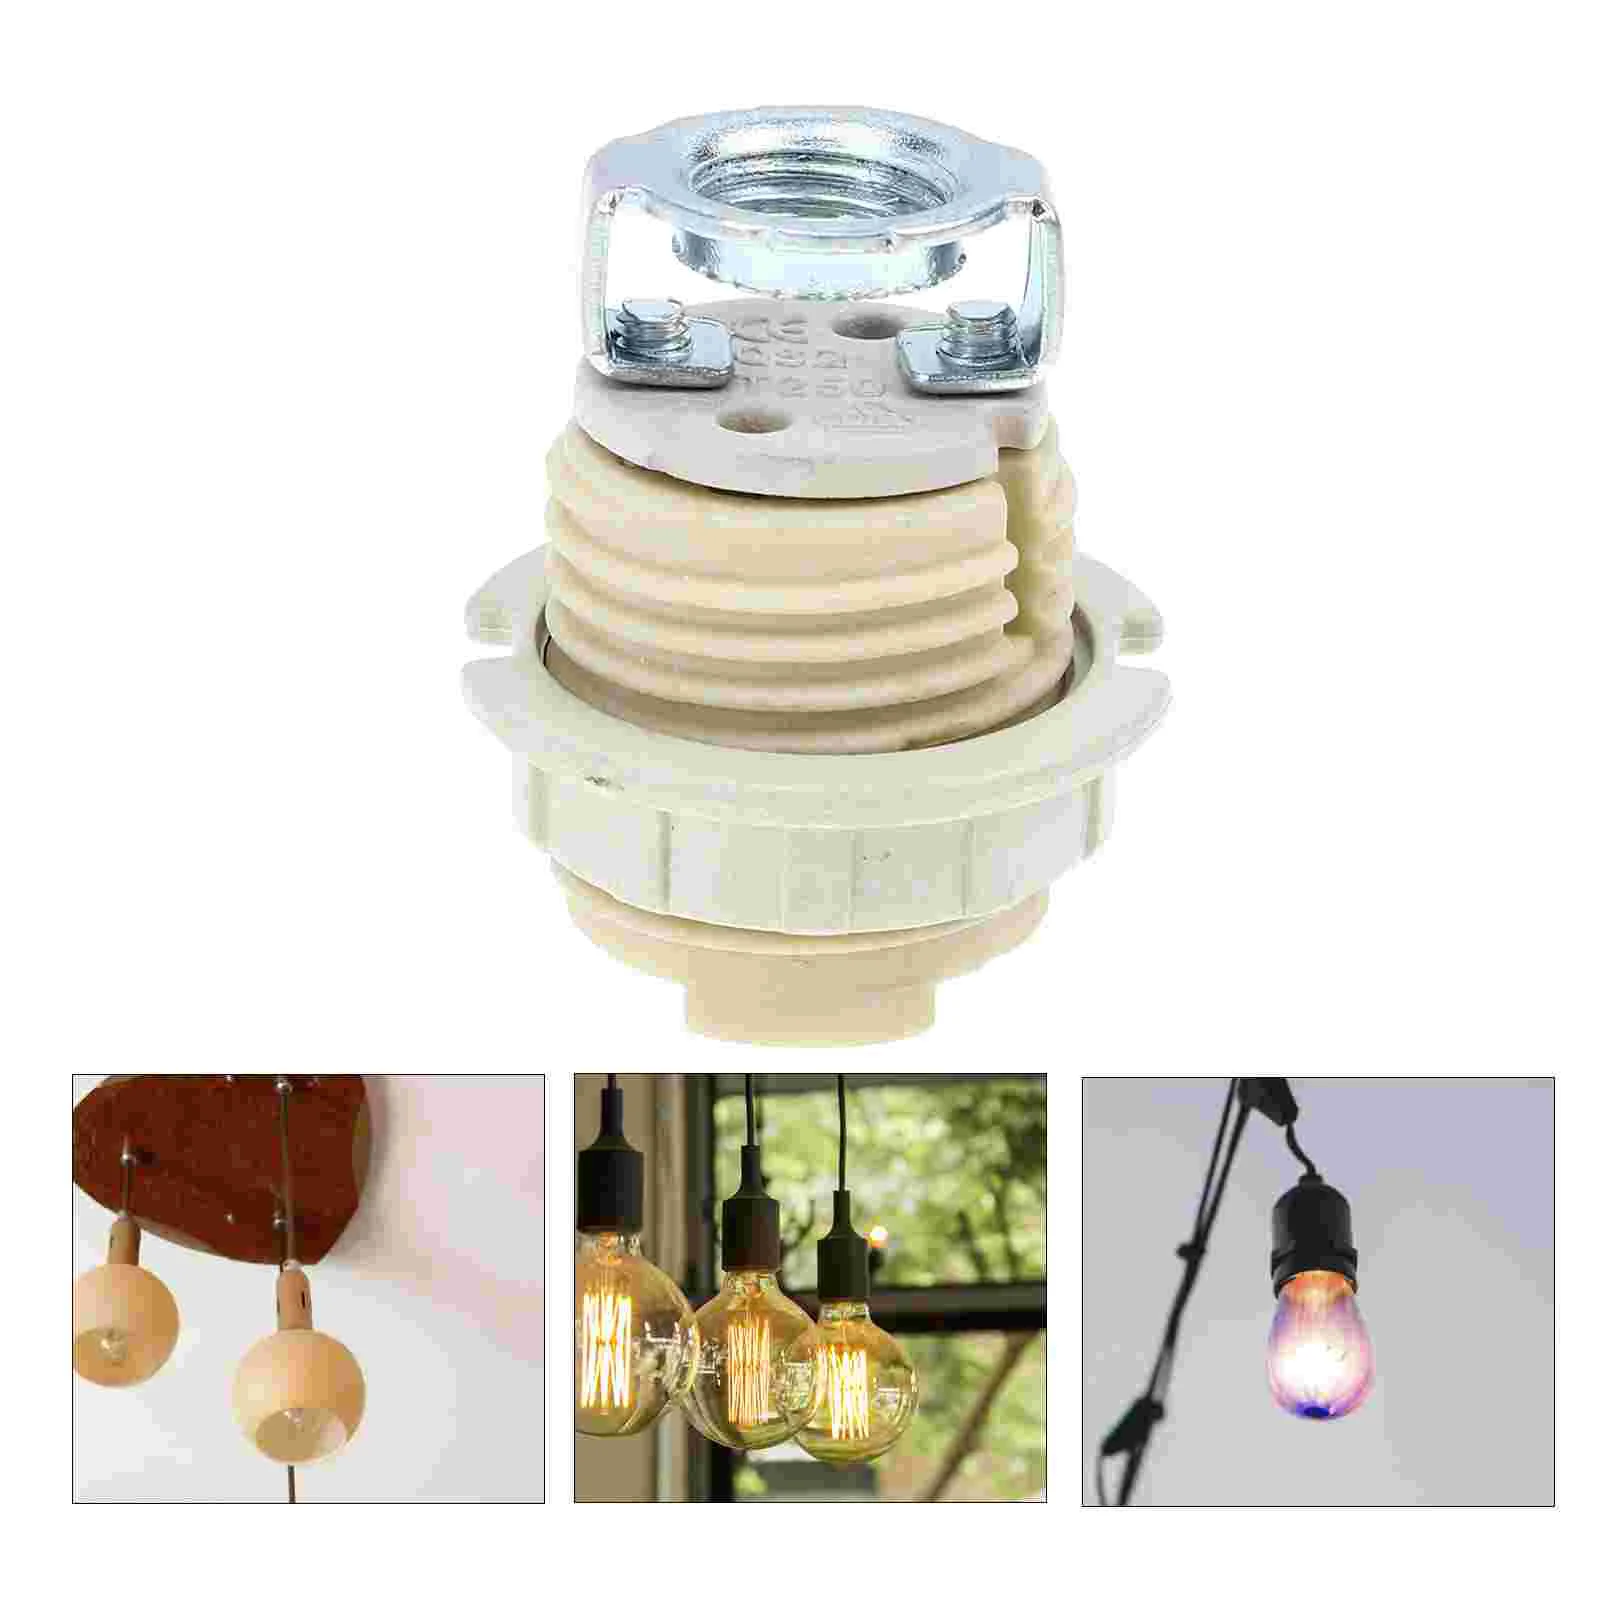 

4Pcs Halogen Light Bulb Holder Replacement Useful G9 Lamp Socket Light Accessories Halogen Light Bulb Sockets